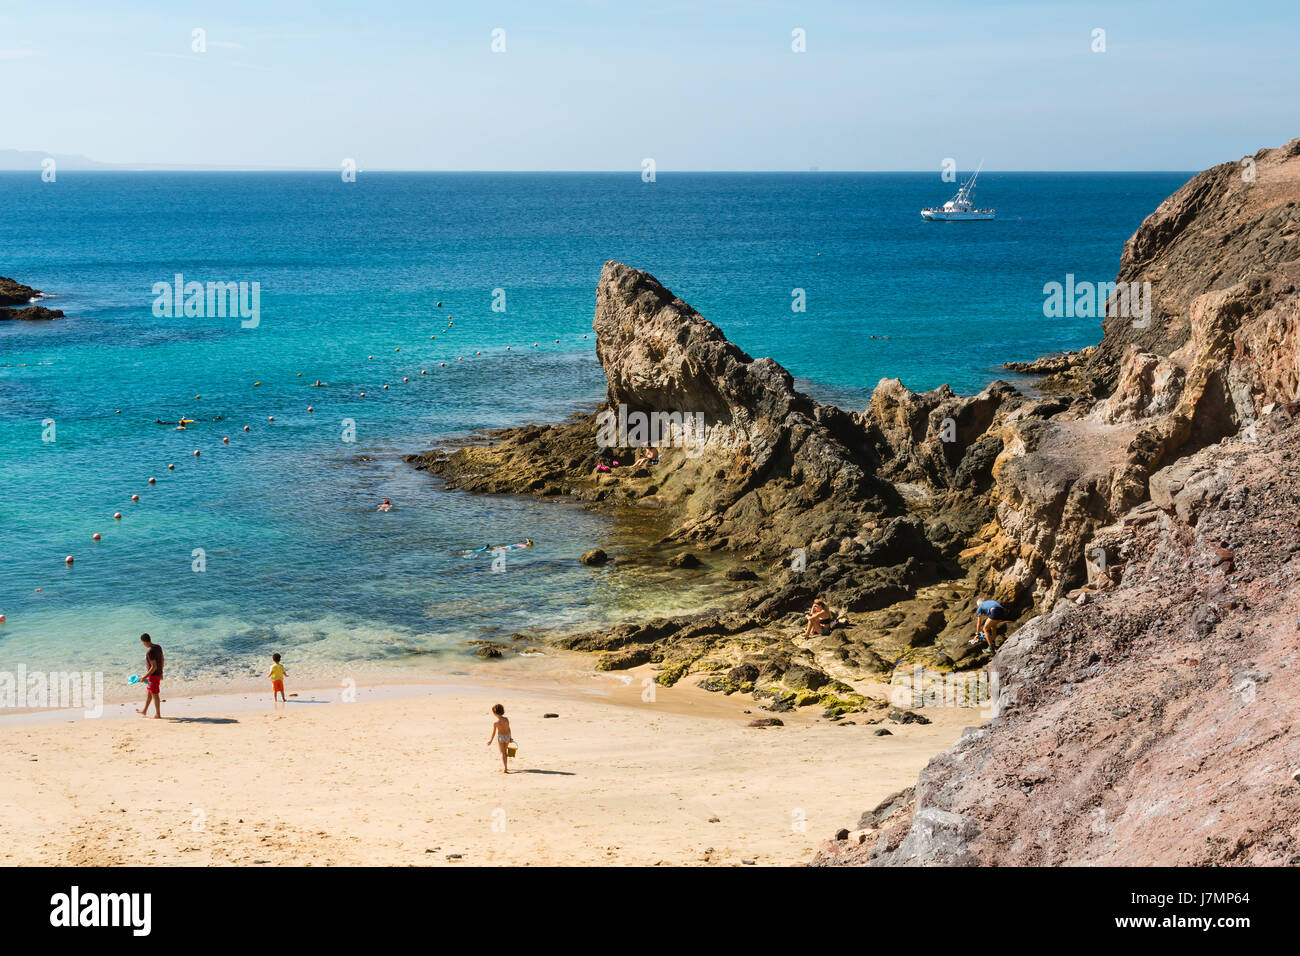 LANZAROTE - JANUARY 13: Tourists on the beautiful beach Playa de Papagayo in Lanzarote, Spain on January 13, 2016. Stock Photo